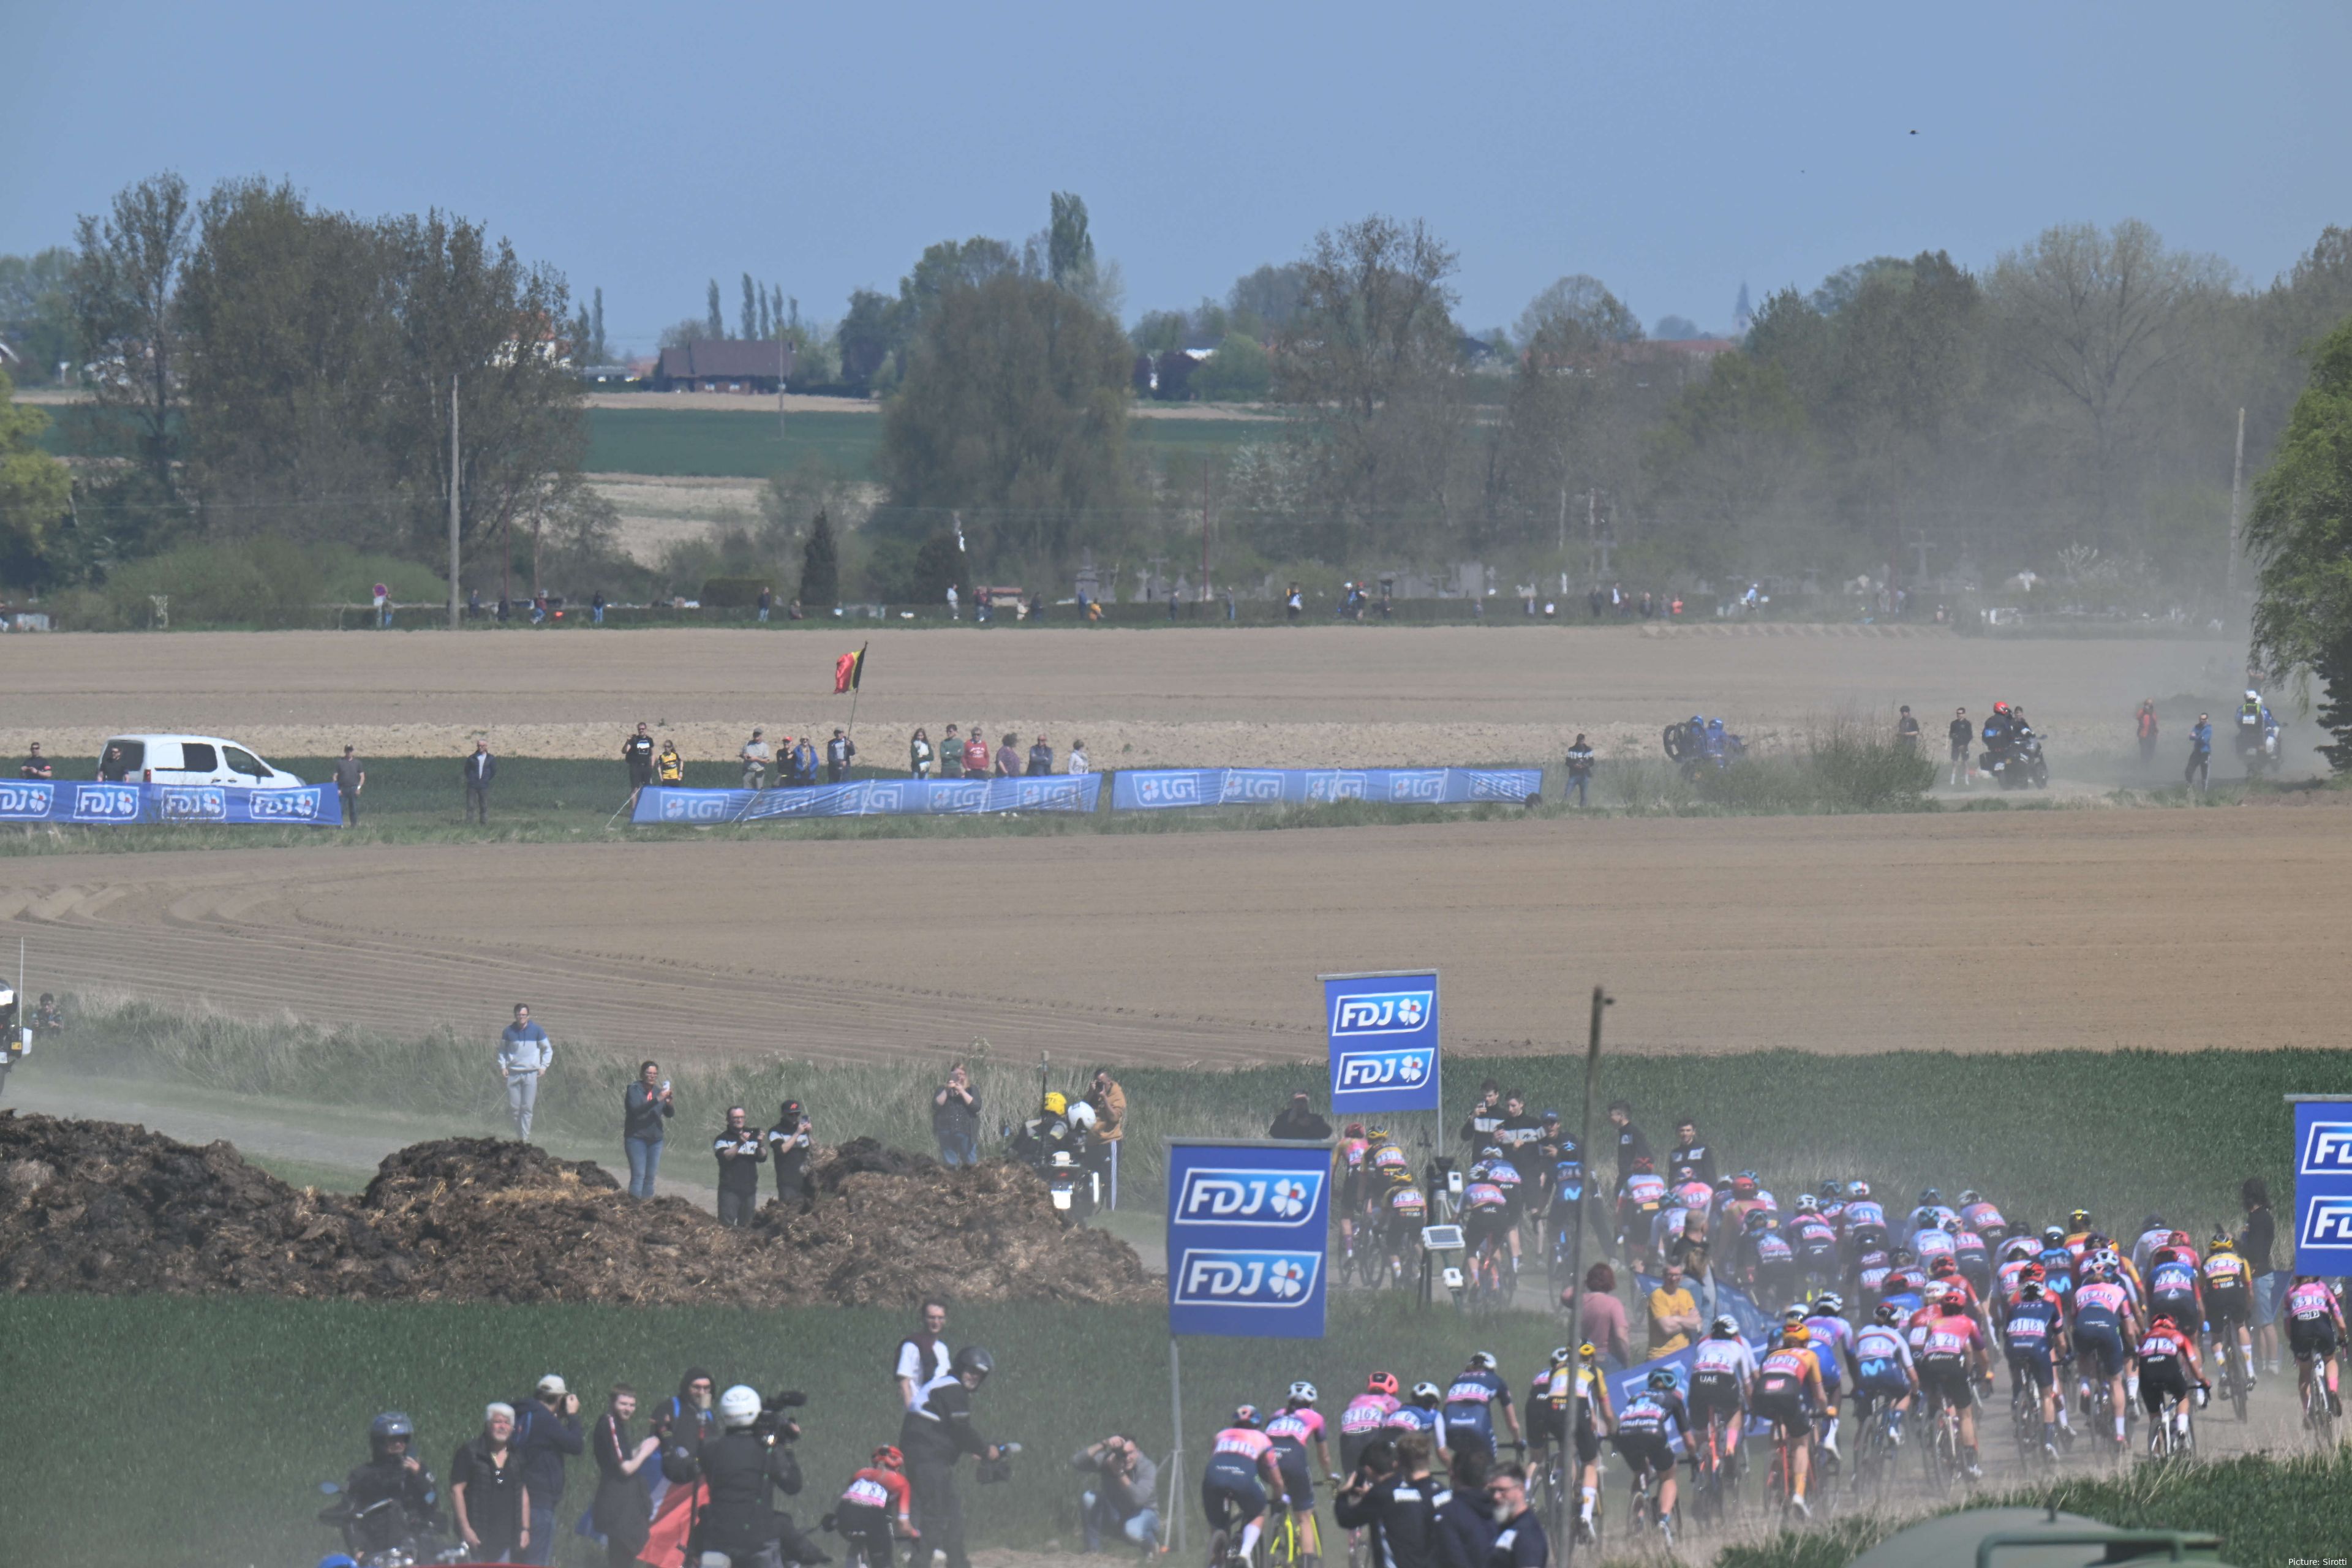 Bild 2022 Paris-Roubaix Peloton. @Sirotti Teilstrecke zwischen Feldern, Fahrer rechts unten&amp;lt;br&amp;gt;